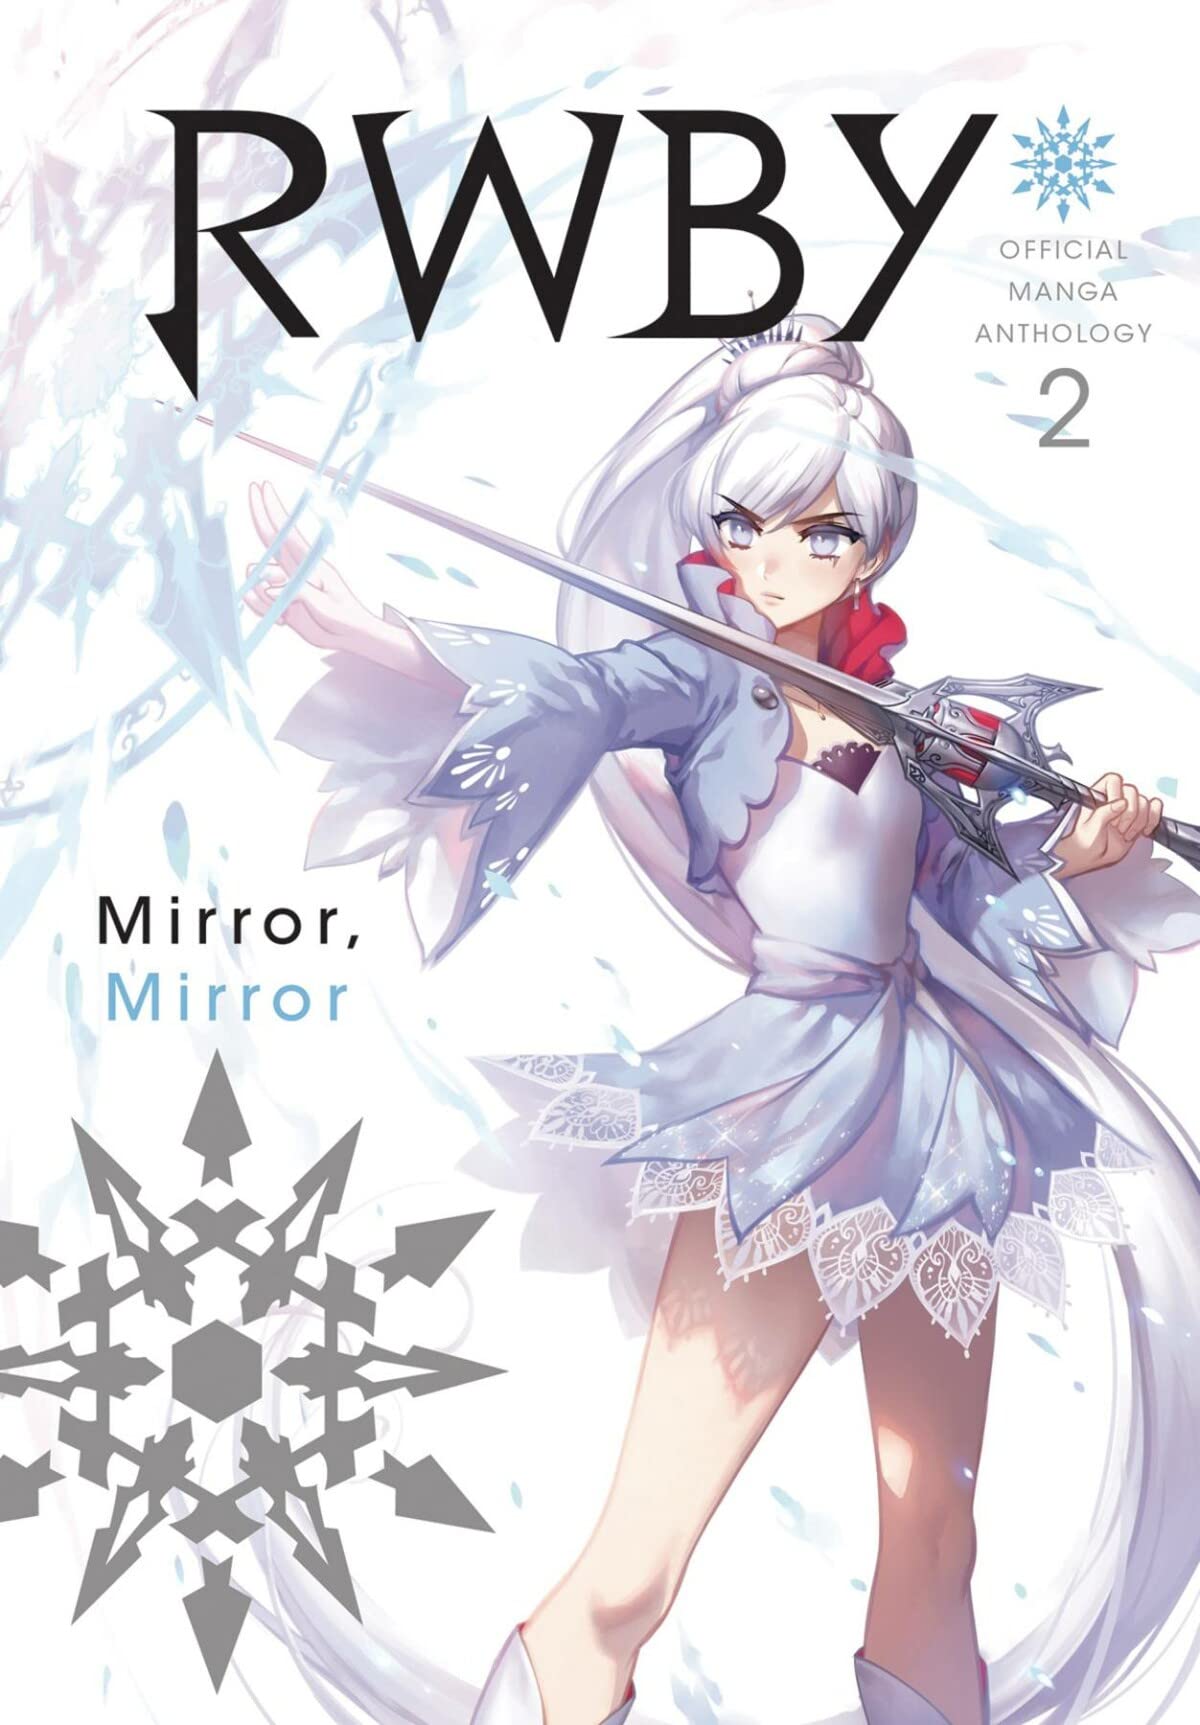 RWBY: Official Manga Anthology, Vol. 2: MIRROR MIRROR (2)